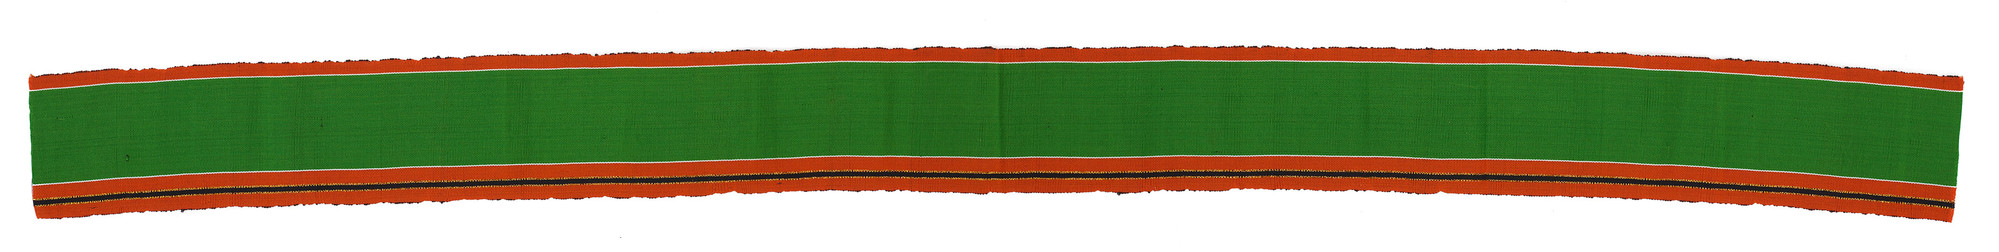 strip of handwoven green and orange striped aso-oke cloth